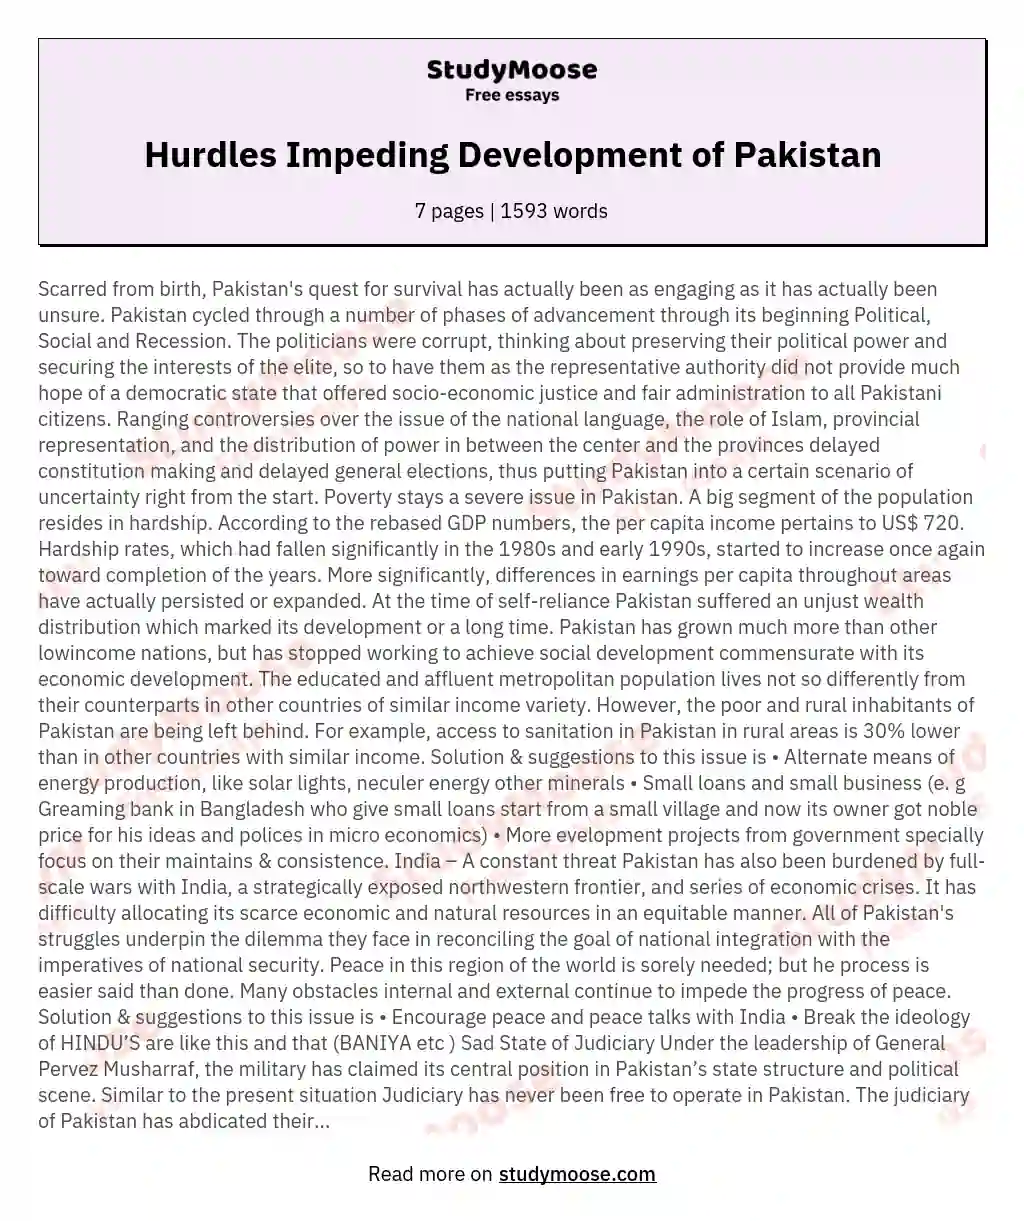 Hurdles Impeding Development of Pakistan essay